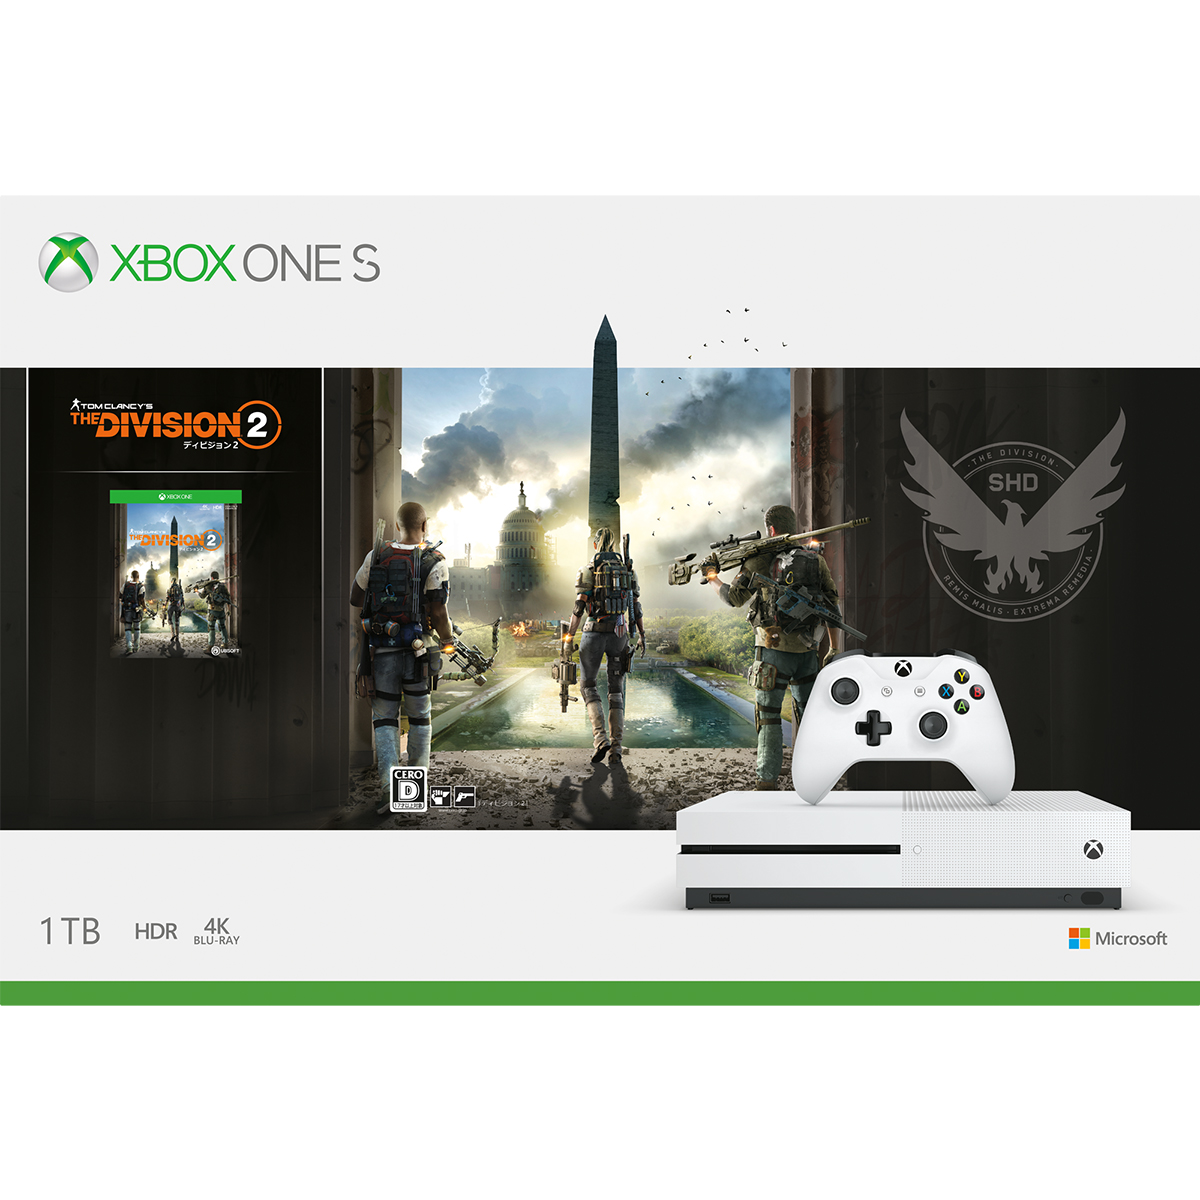 Xbox One S 1 TB (ディビジョン2 同梱版)